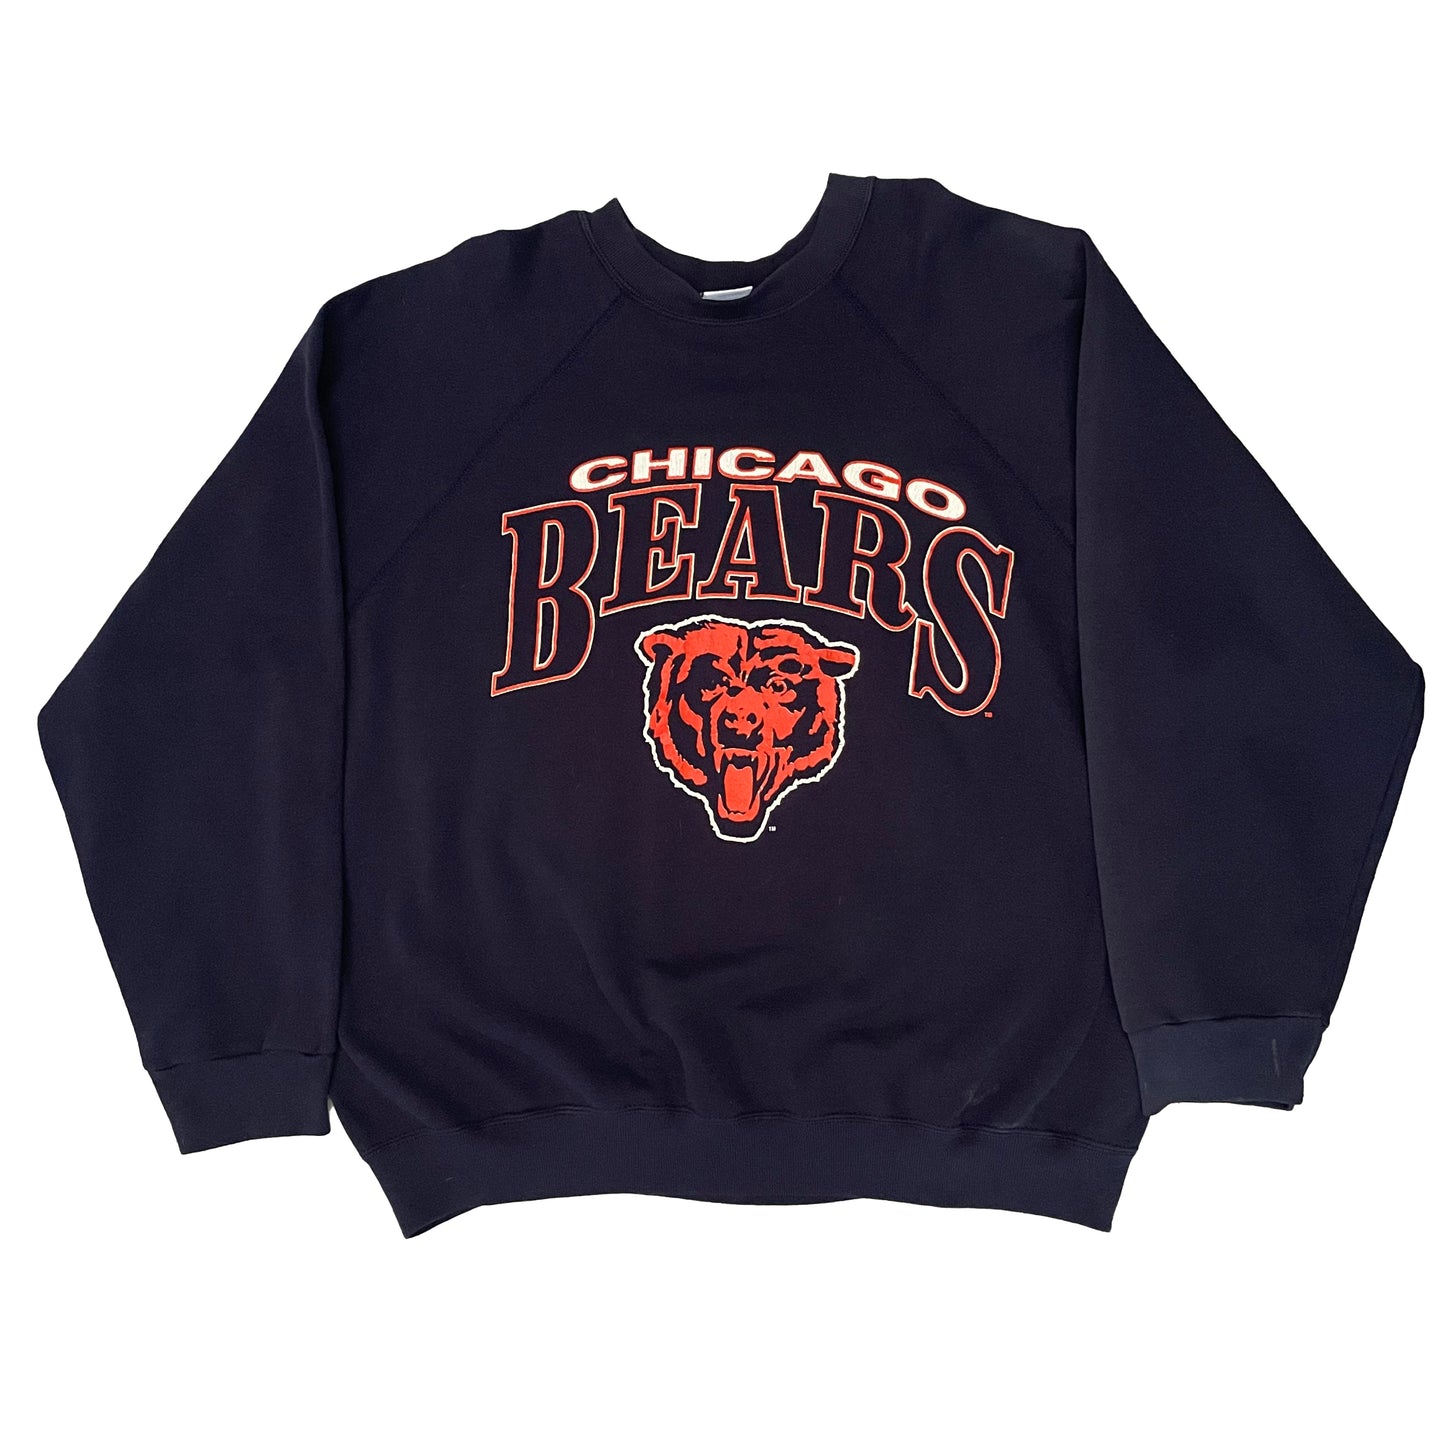 Chicago Bears sweatshirt